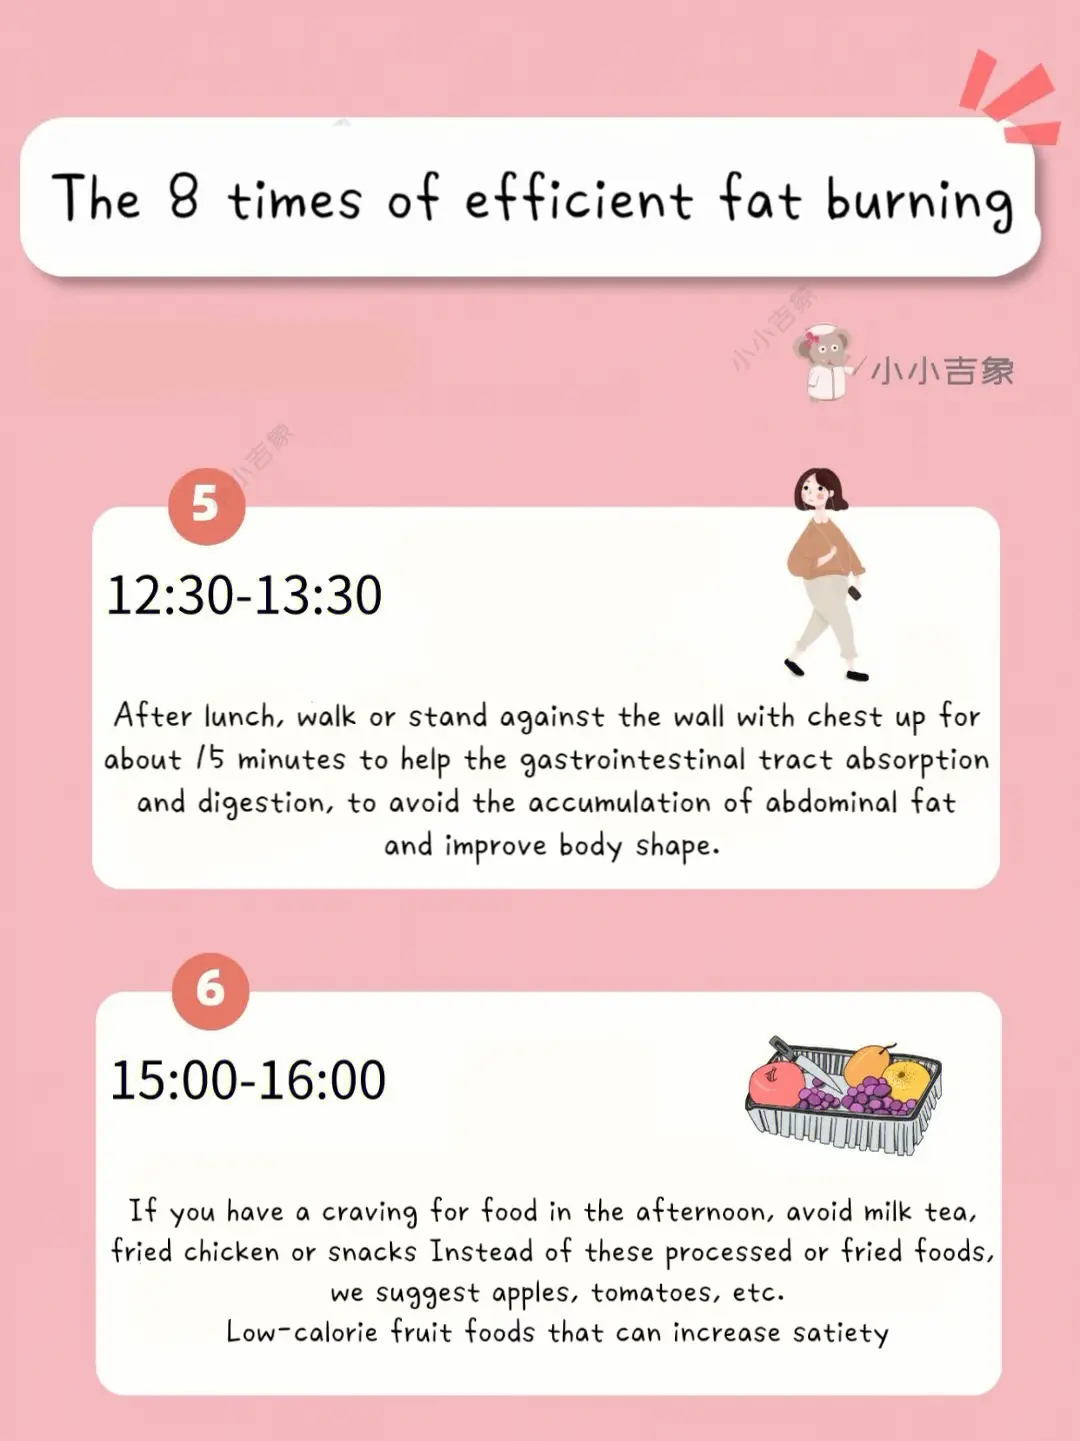 Efficient fat burning